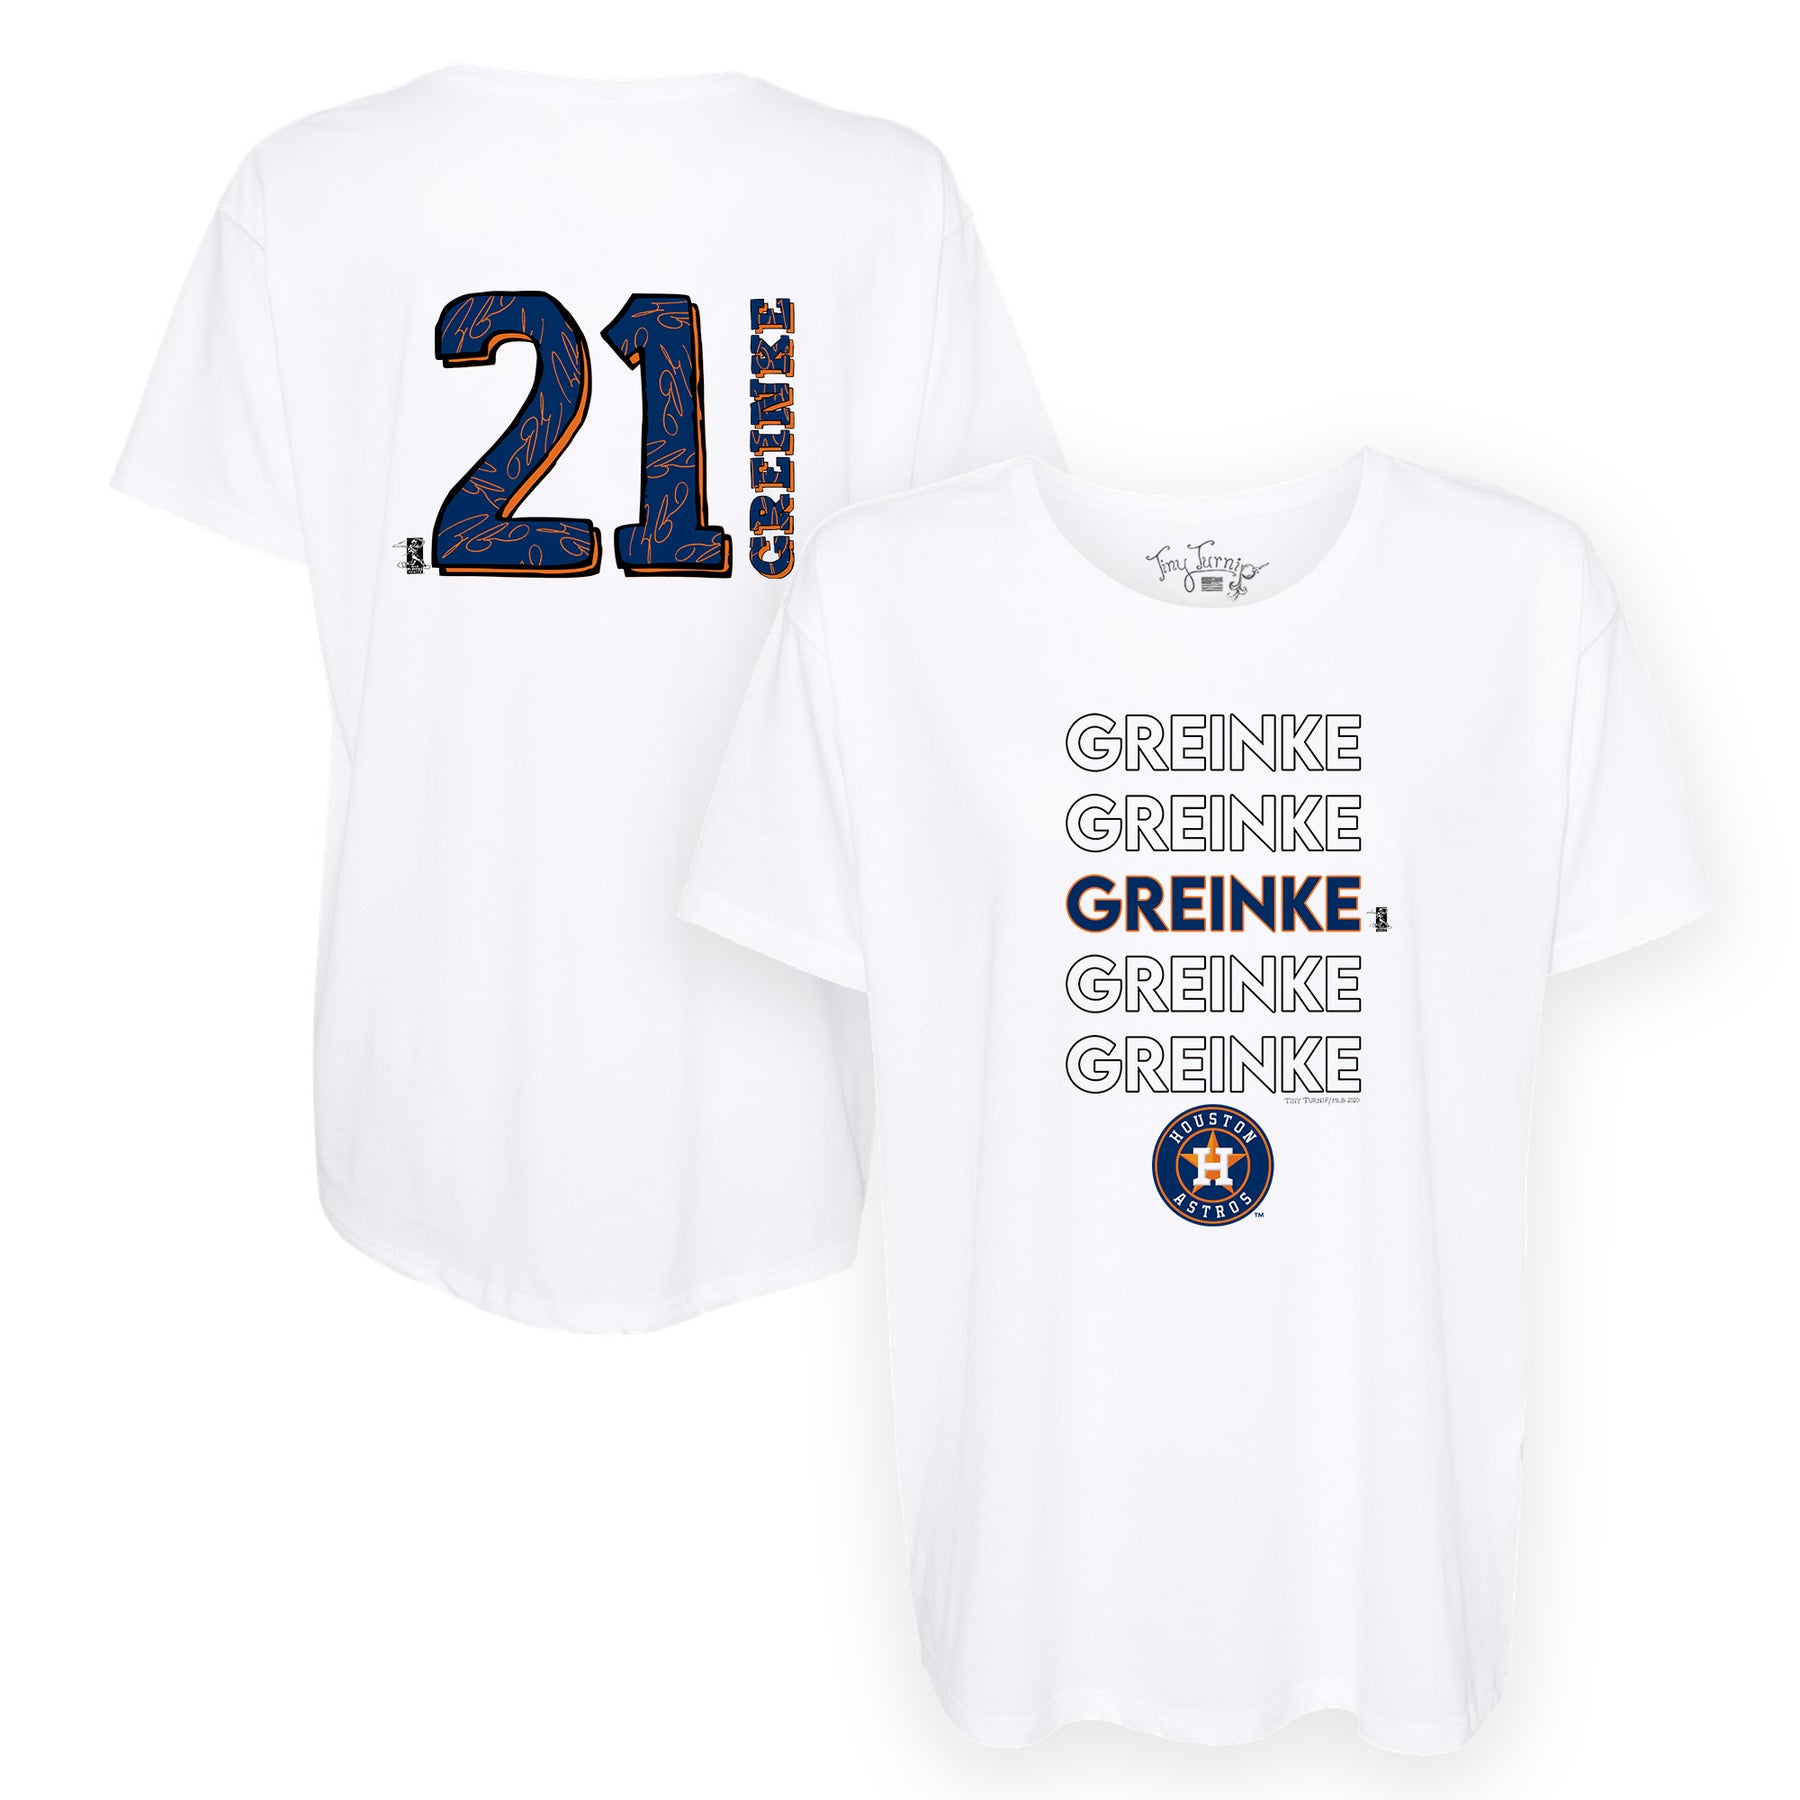 Houston Astros Zack Greinke Stacked Tee Shirt